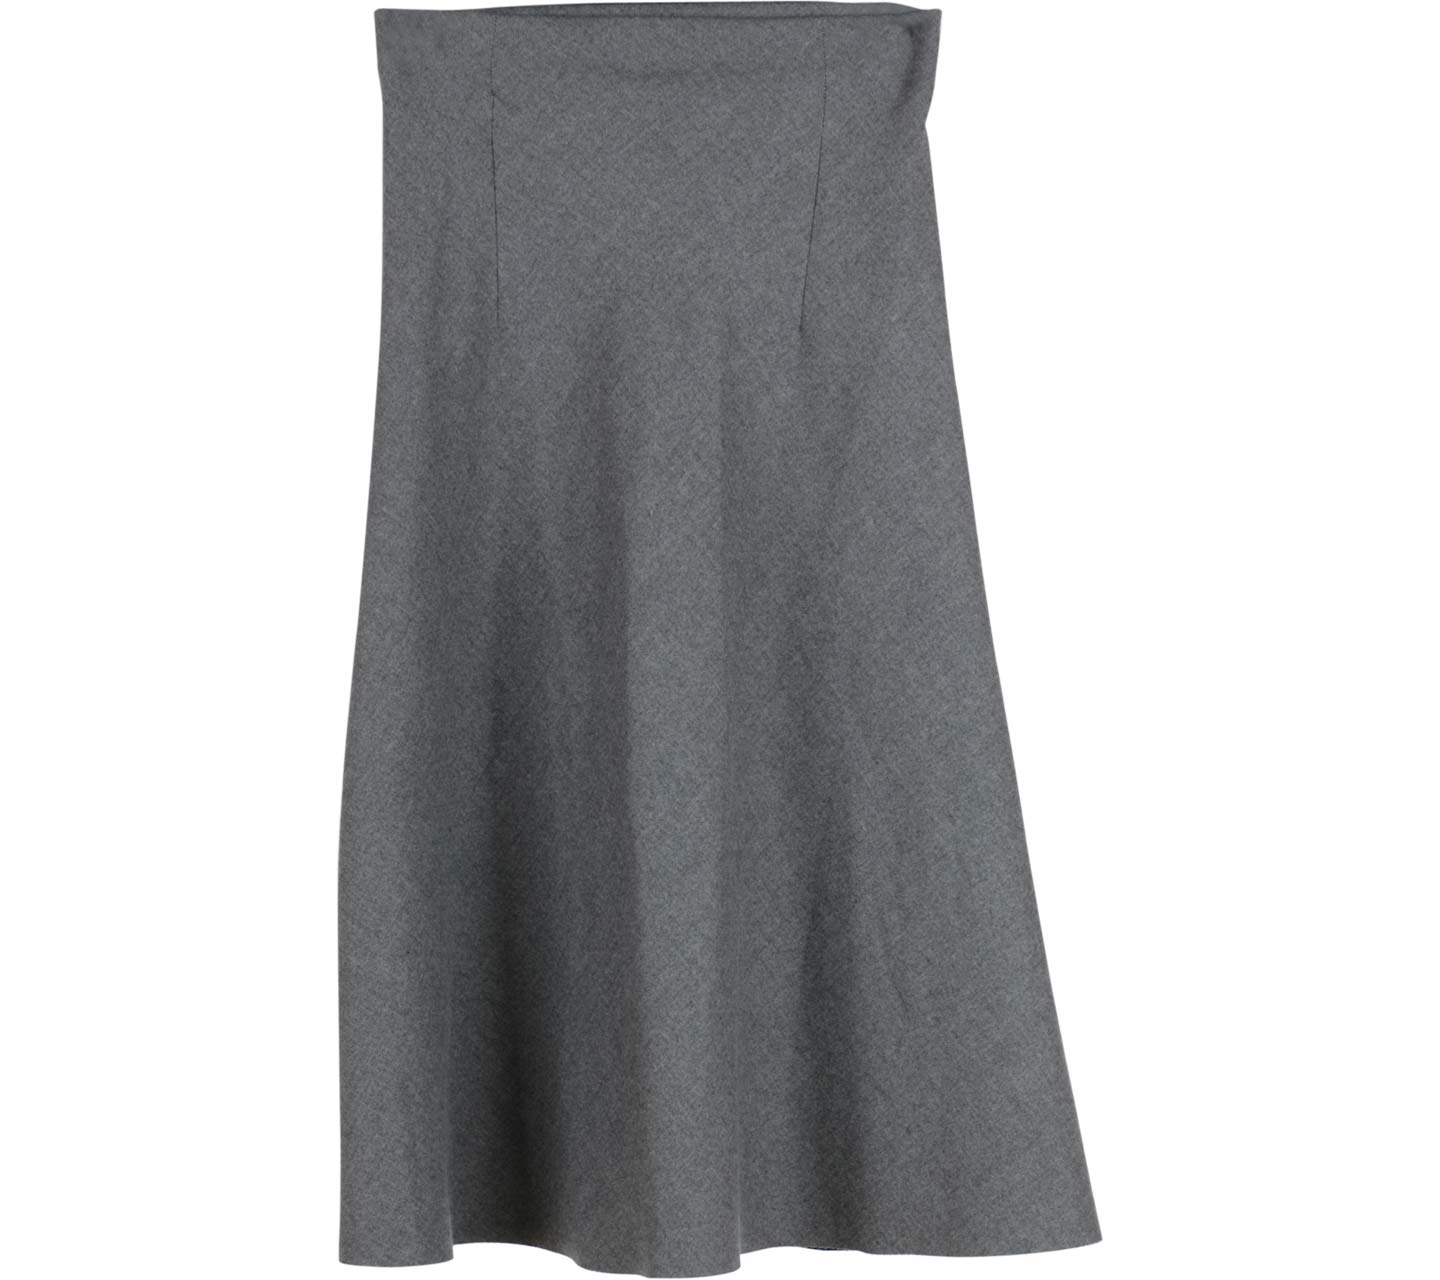 Zara Grey Flare Midi Skirt